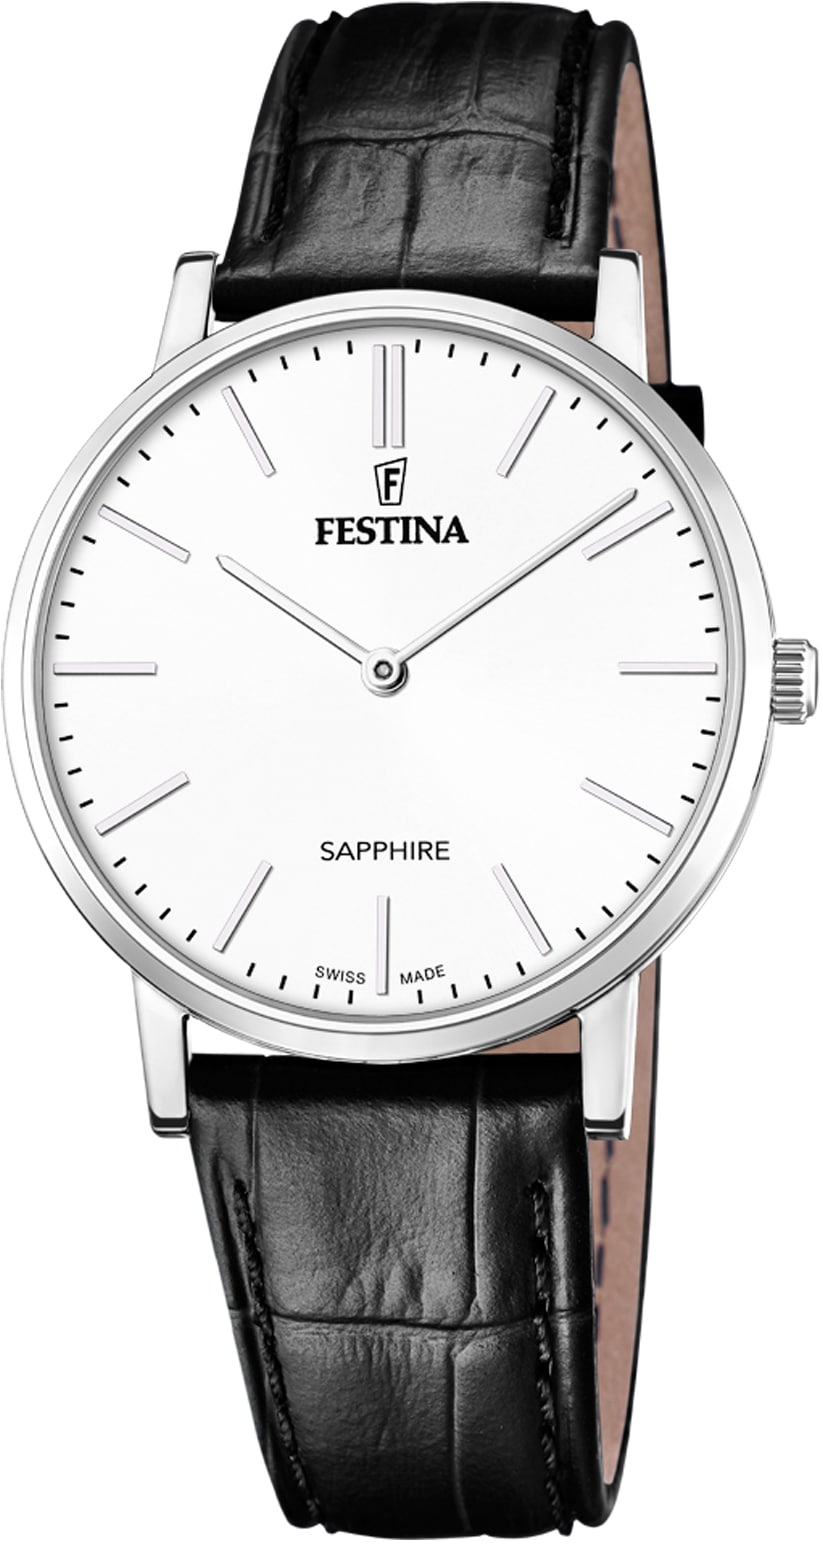 Festina Schweizer Uhr »Festina Swiss Made, bestellen F20012/1« bequem